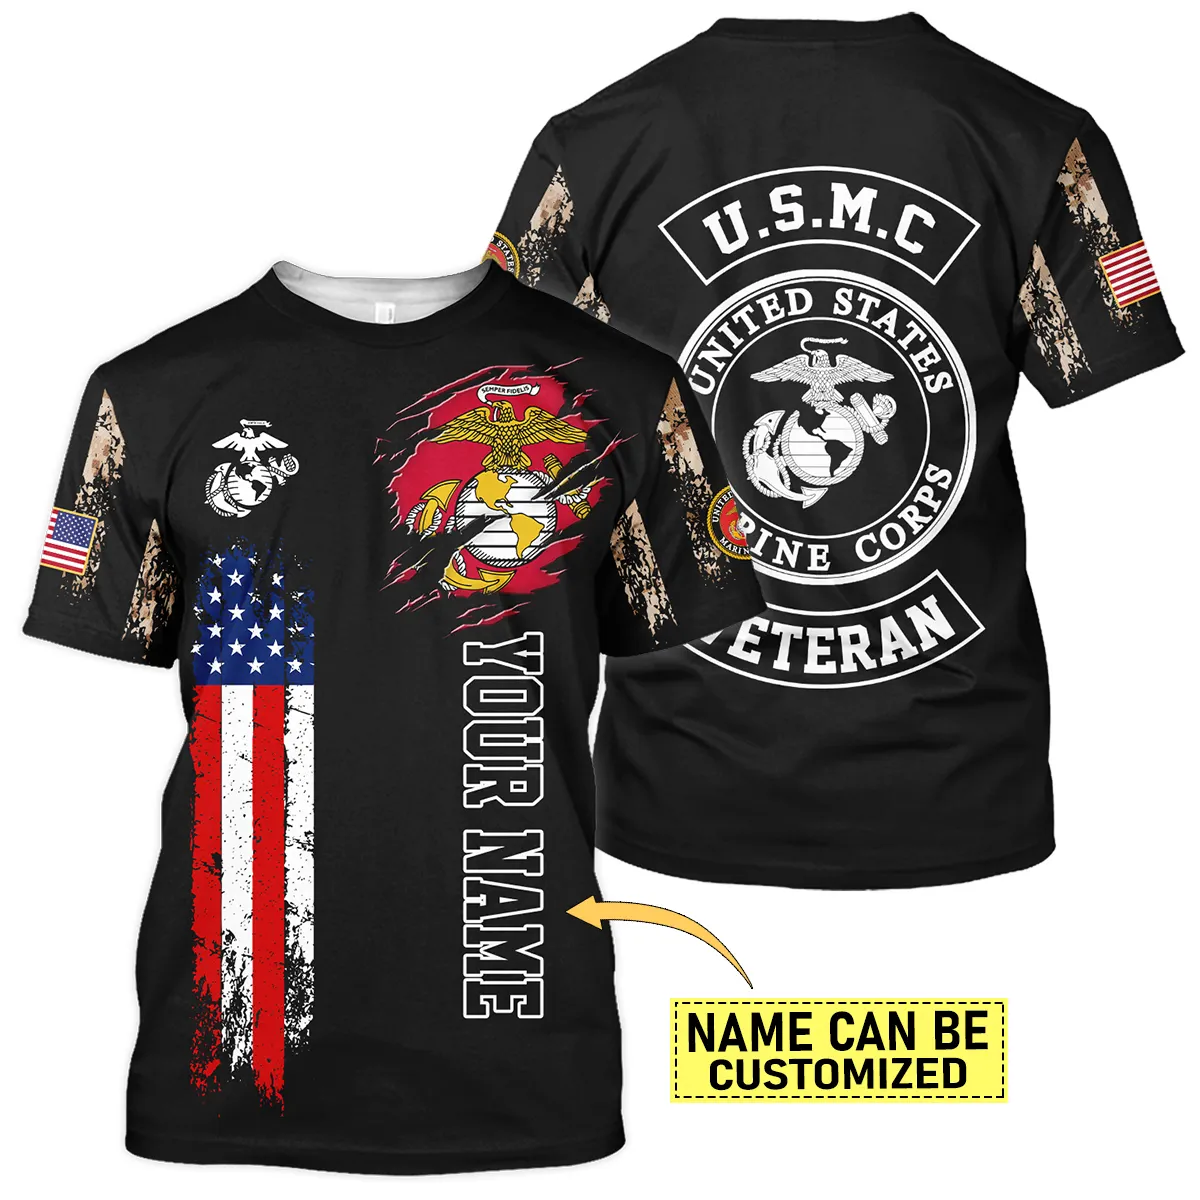 Flag Camo Pattern Custom Name U.S. Marine Corps All Over Prints Polo Shirt